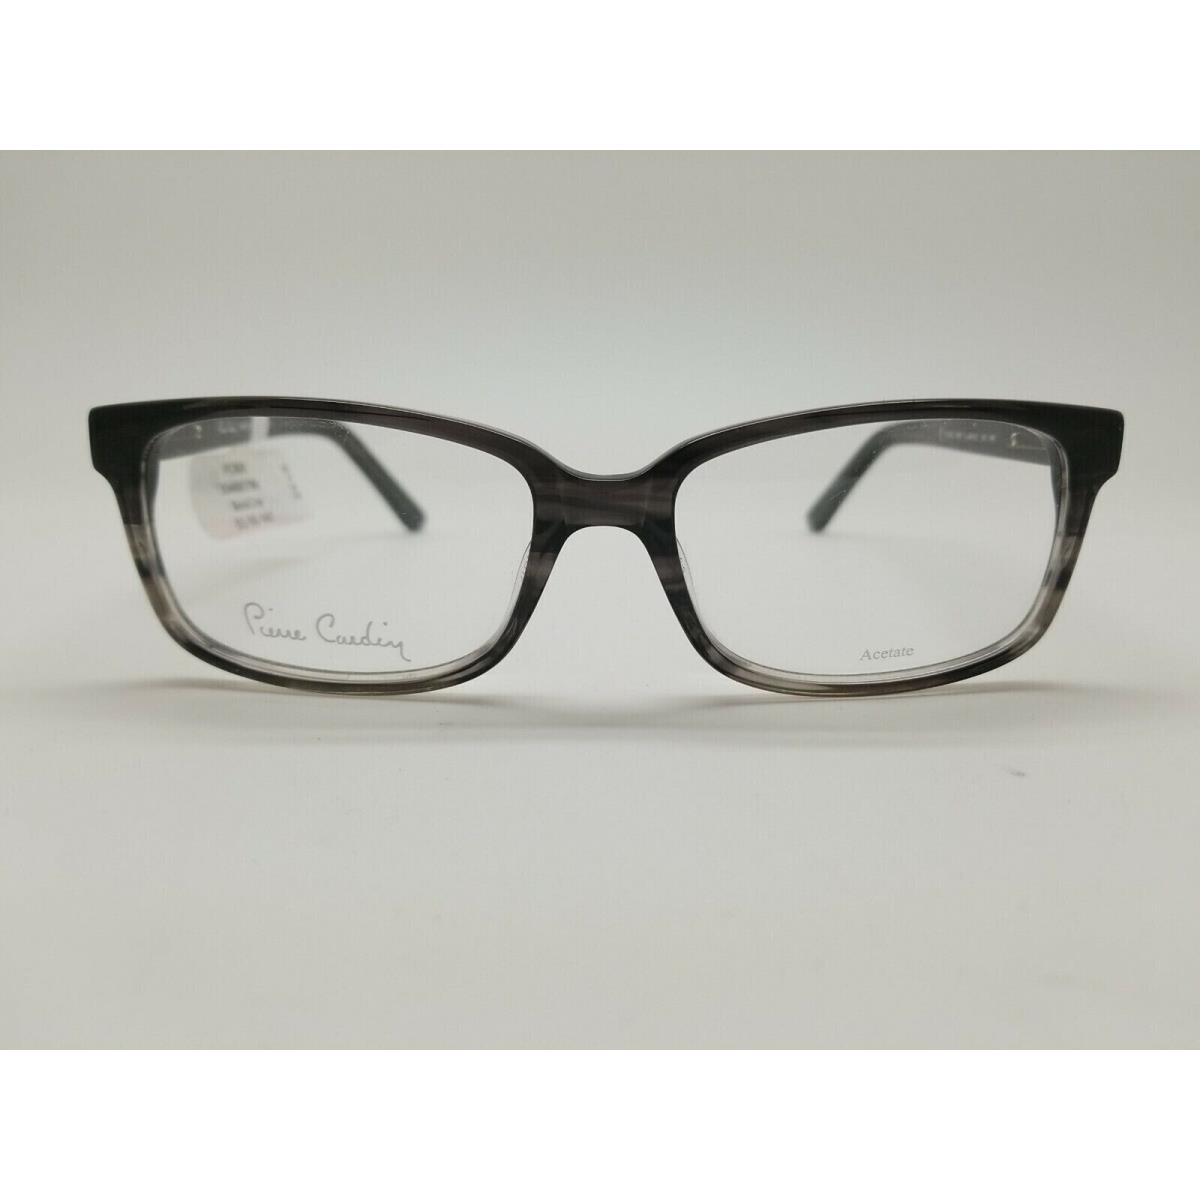 1 Unit Pierre Cardin Smoke Crystal Eyeglass Frame 54-17-145 295